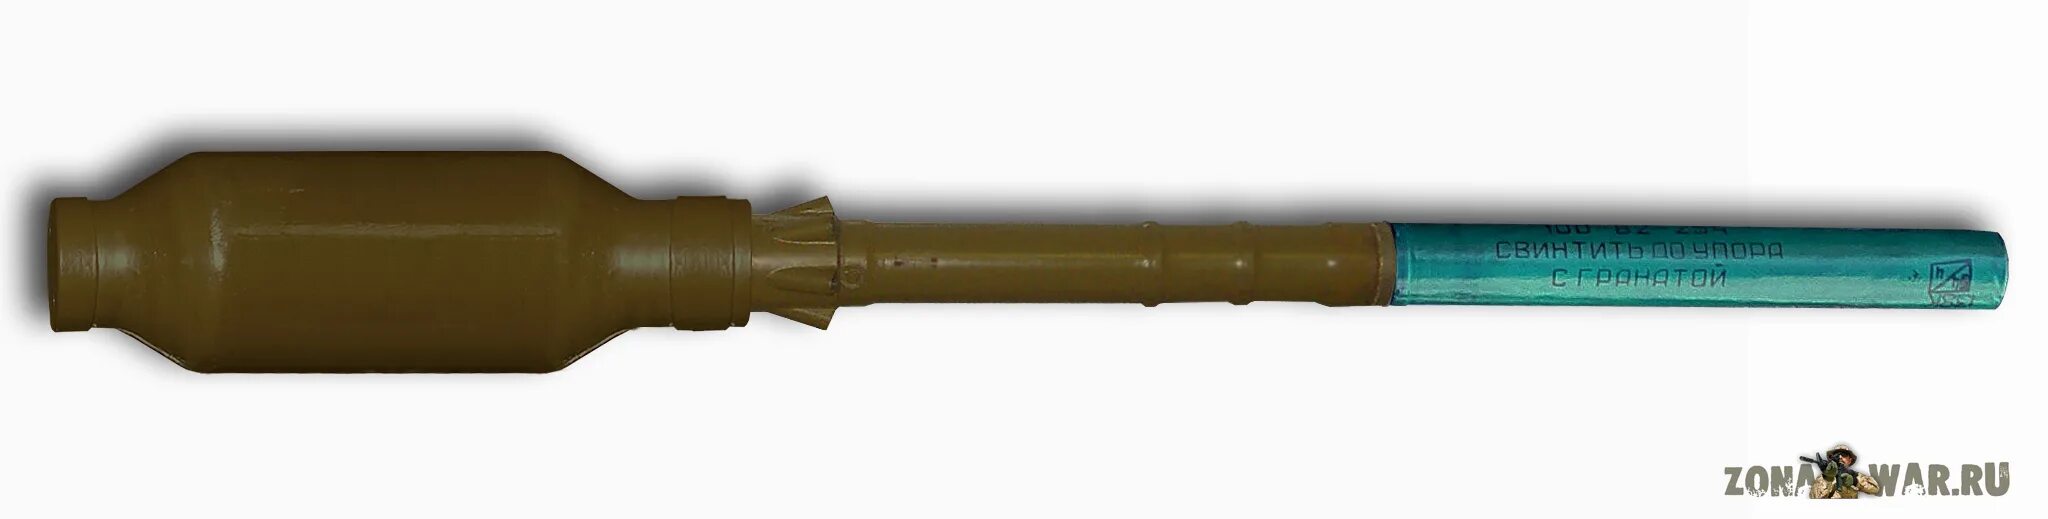 РПГ-7 ТБГ-7. Термобарический боеприпас для РПГ-7. РПГ-7 С выстрелом ТБГ-7в. РПГ 7 термобарический выстрел. Рпг кумулятивный